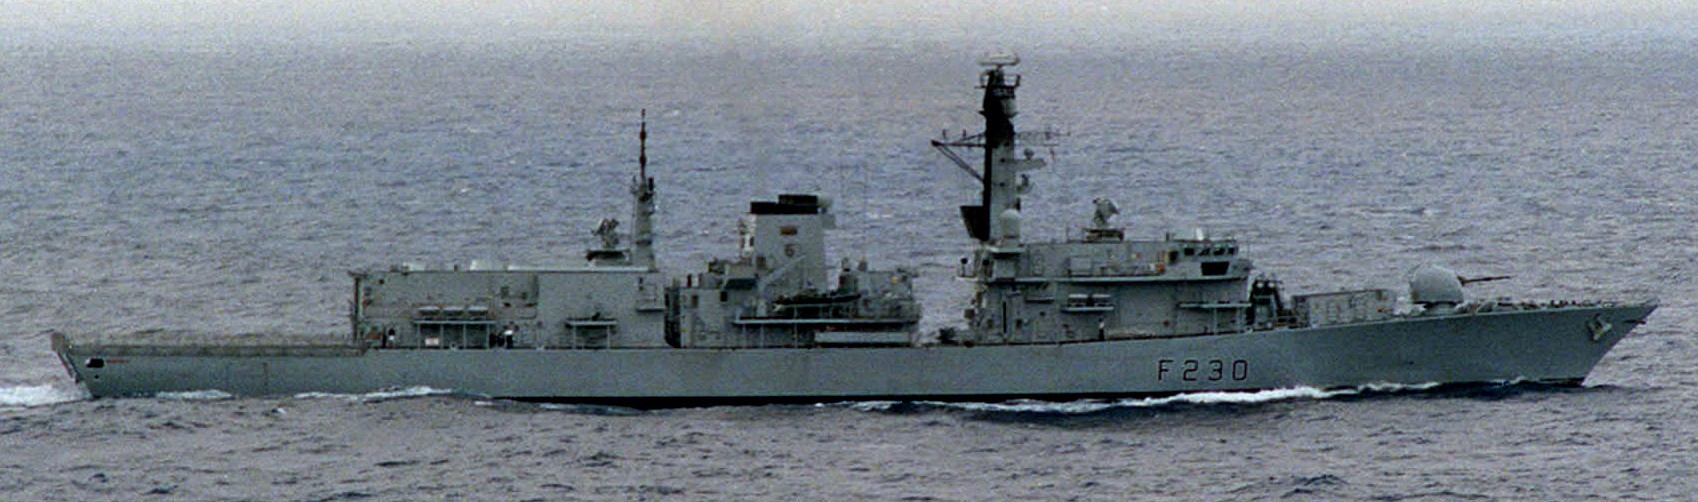 f-230 hms norfolk type 23 duke class guided missile frigate ffg royal navy 02